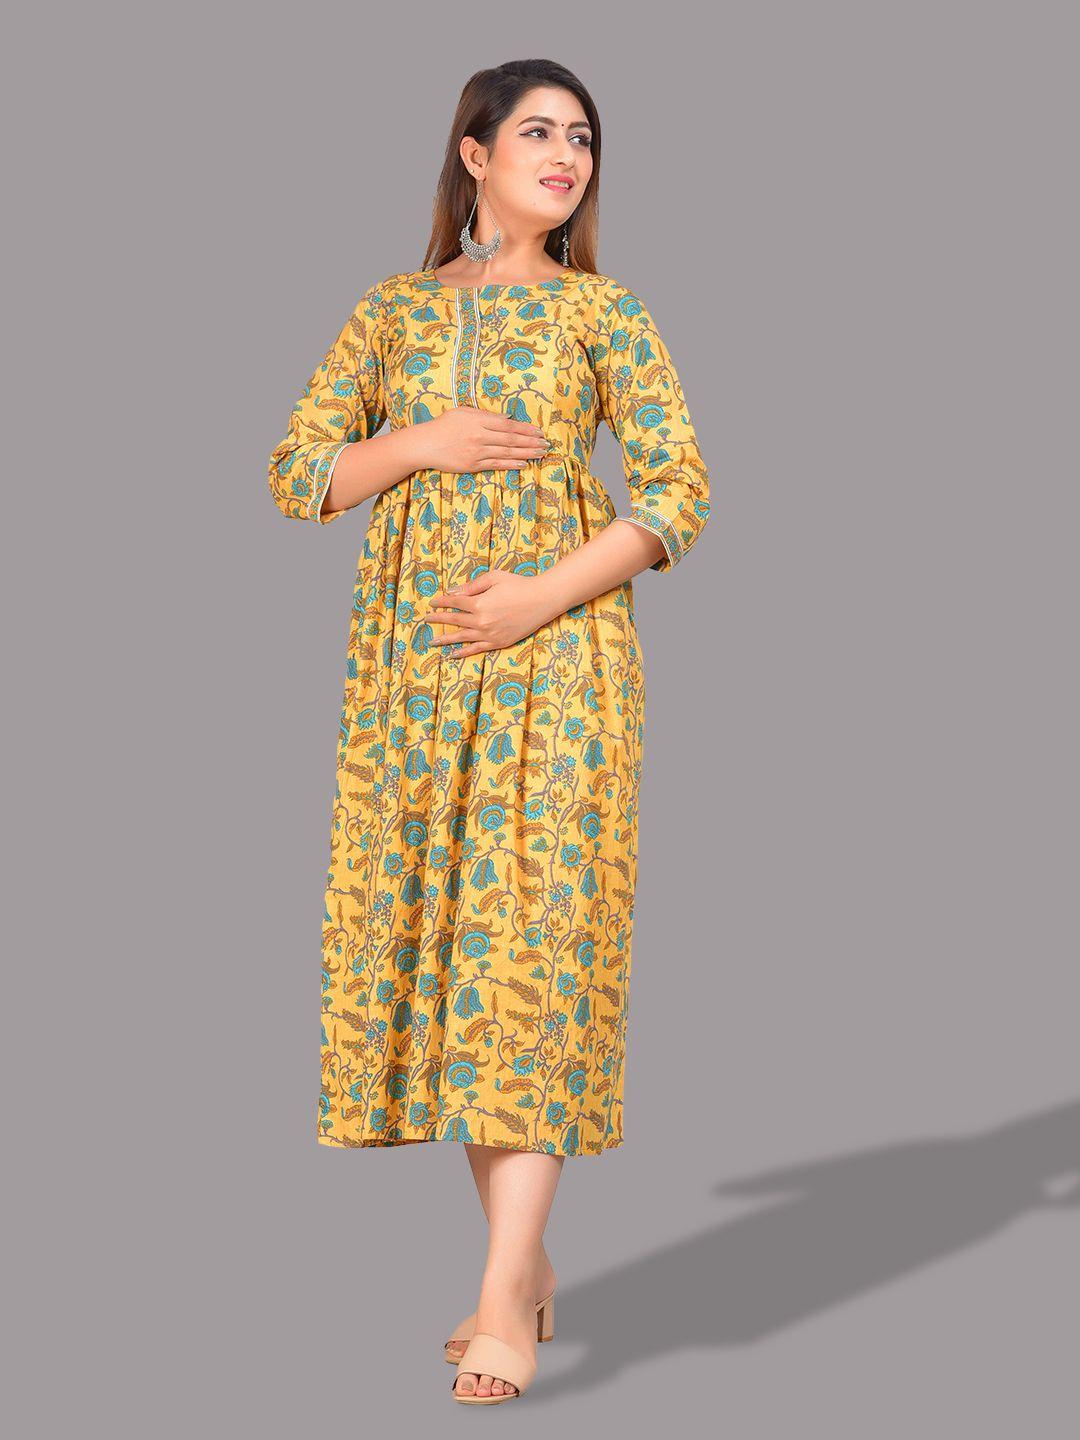 unibliss-floral-printed-cotton-maternity-feeding-a-line-midi-dress